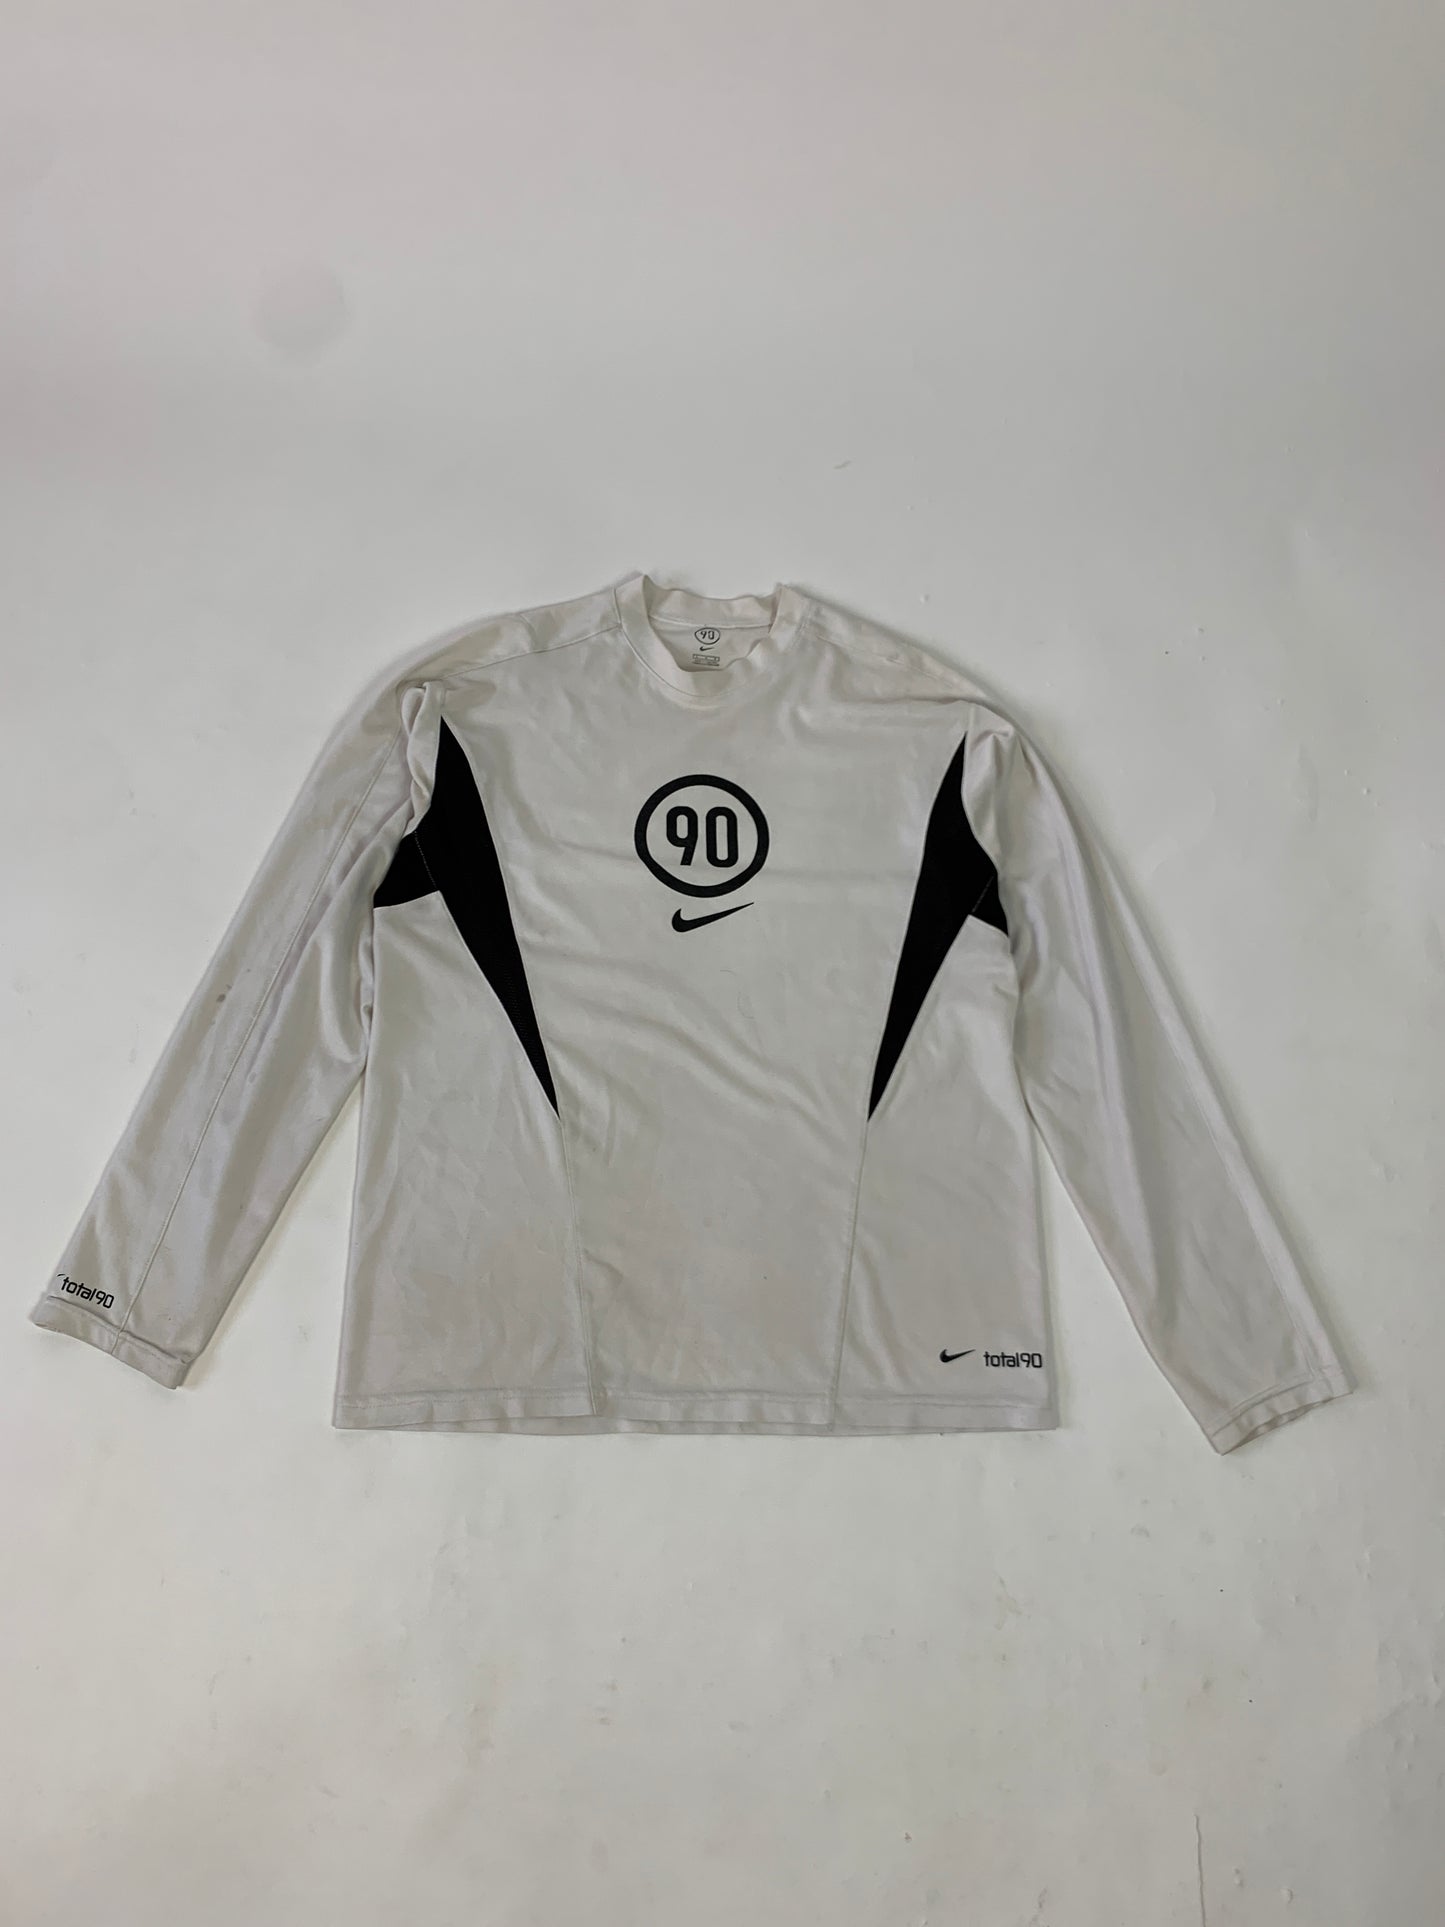 Nike Total 90 Vintage Jersey - M